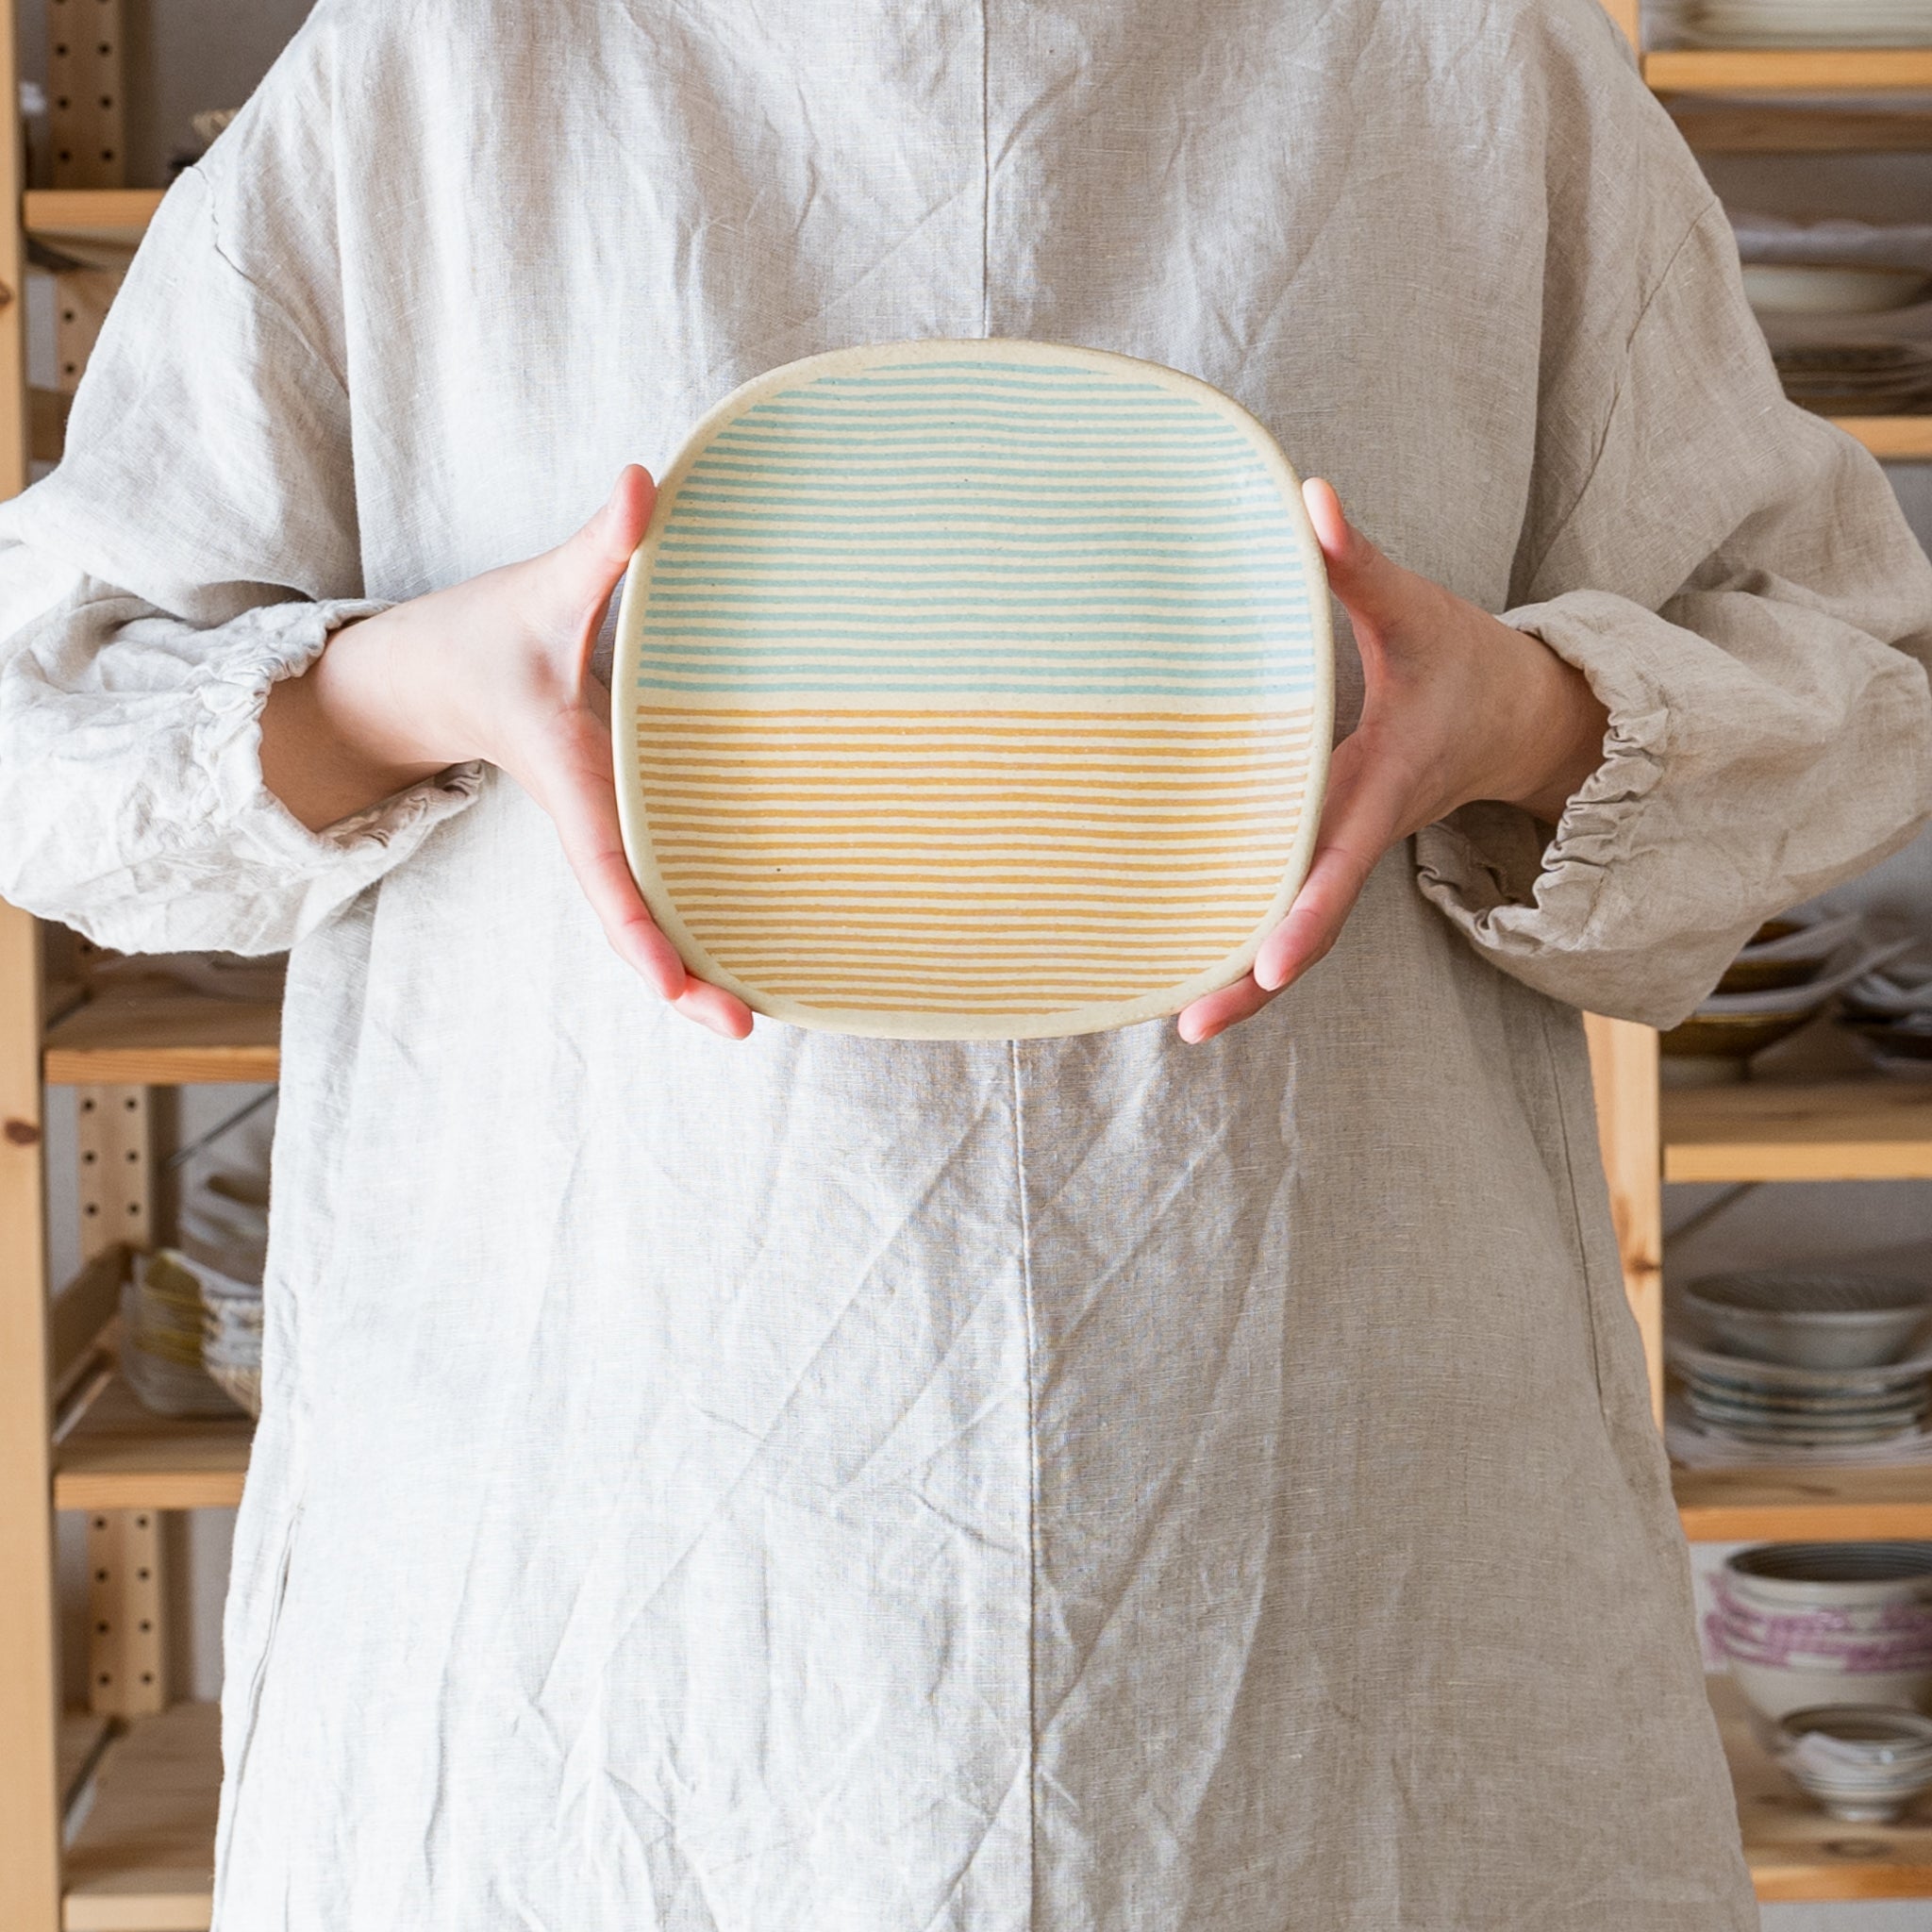 Hanako Sakashita's kneaded square plate that makes eating bread fun